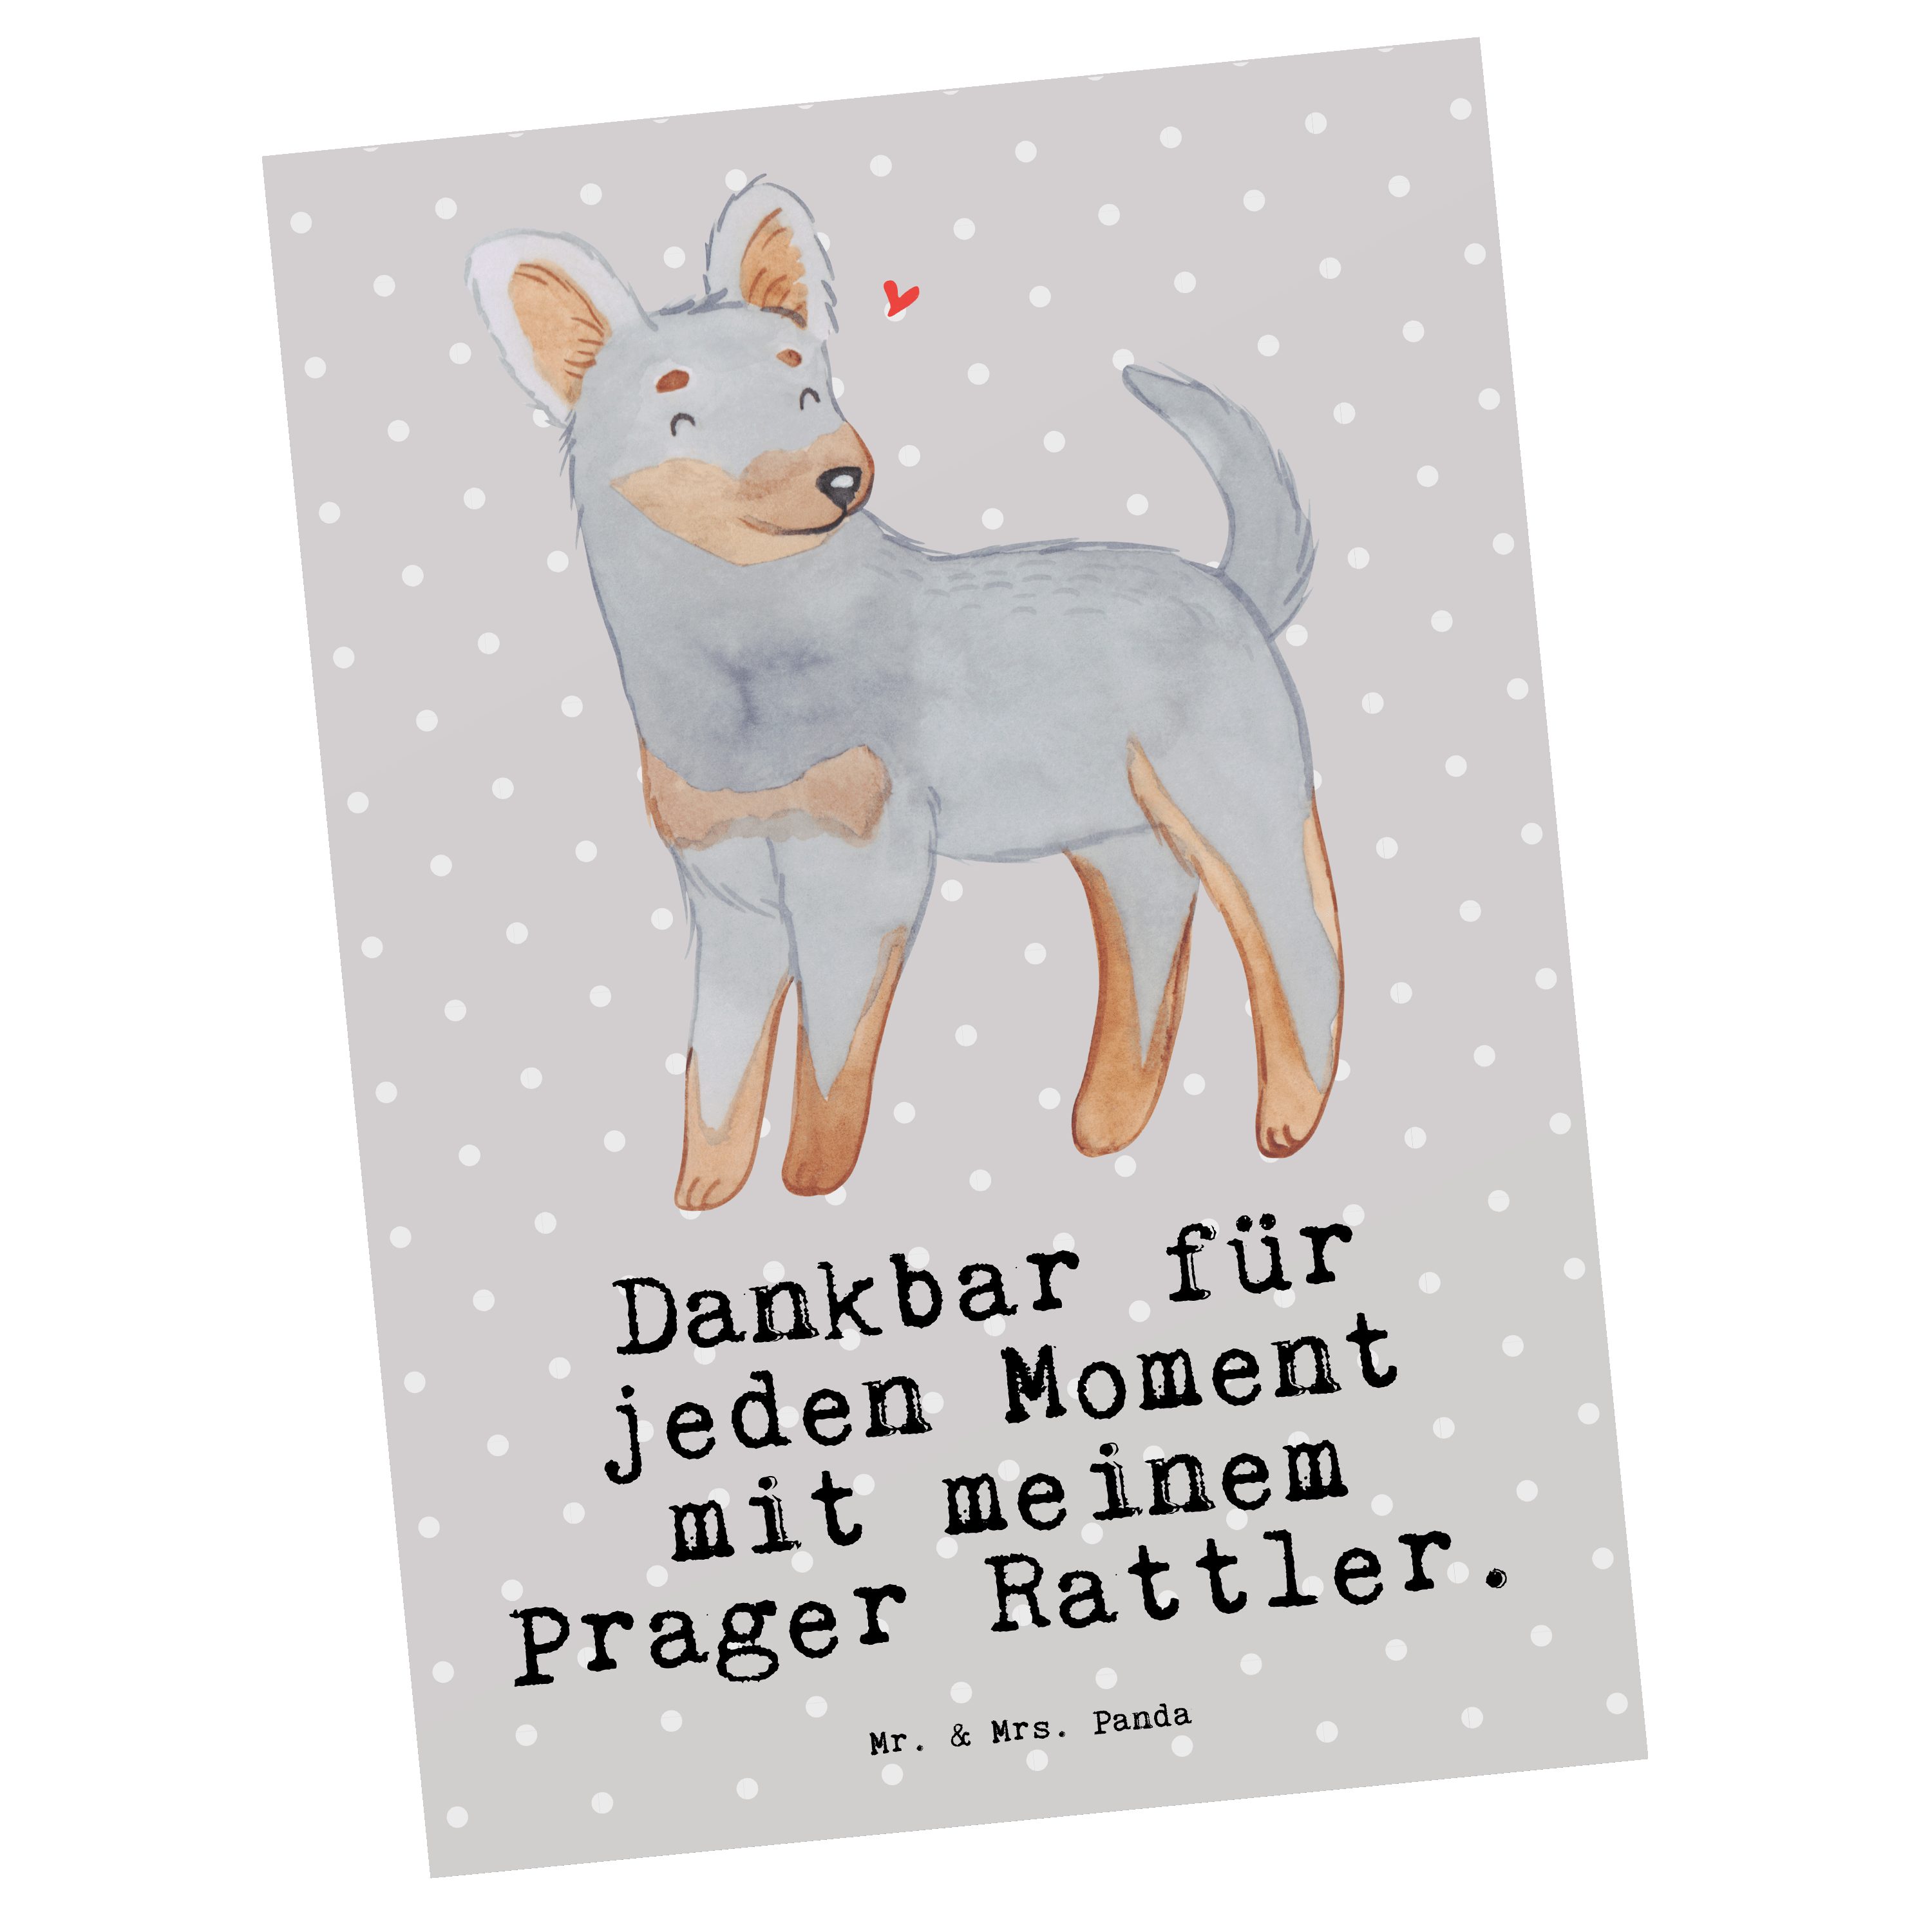 Mr. & Mrs. Panda Postkarte Prager Rattler Moment - Grau Pastell - Geschenk, Grußkarte, Ansichtsk